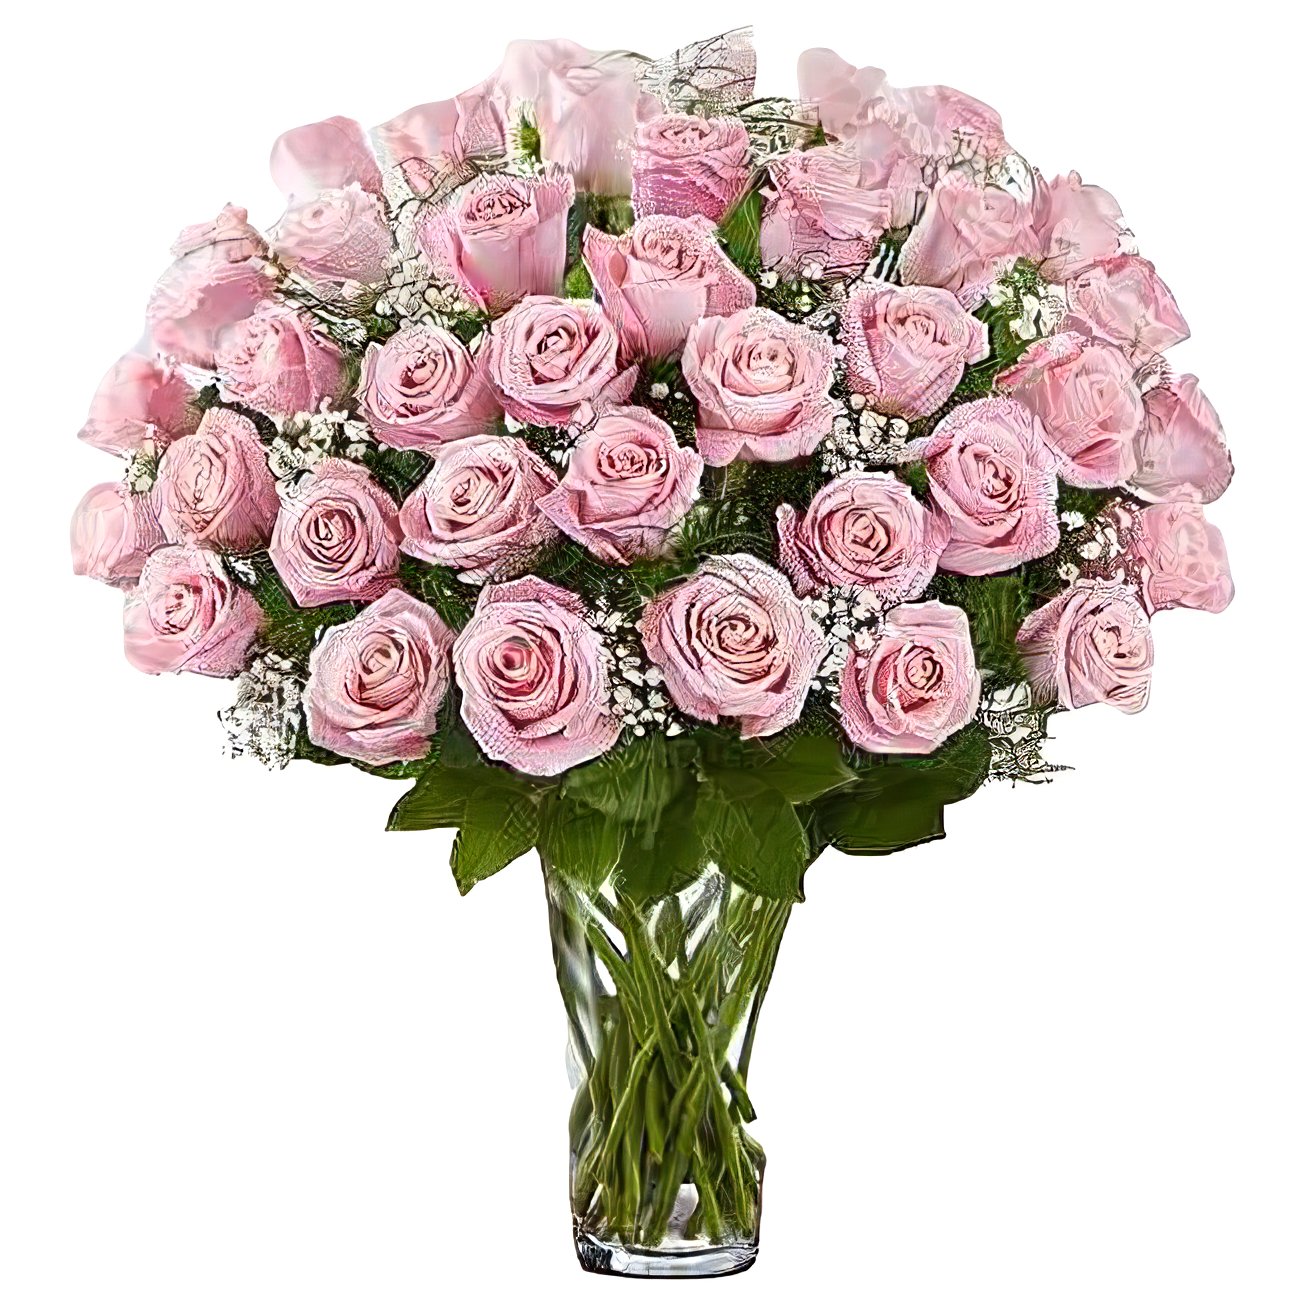 Premium Long Stem - 48 Pink Roses - Floral Arrangement - Flower Delivery Brooklyn